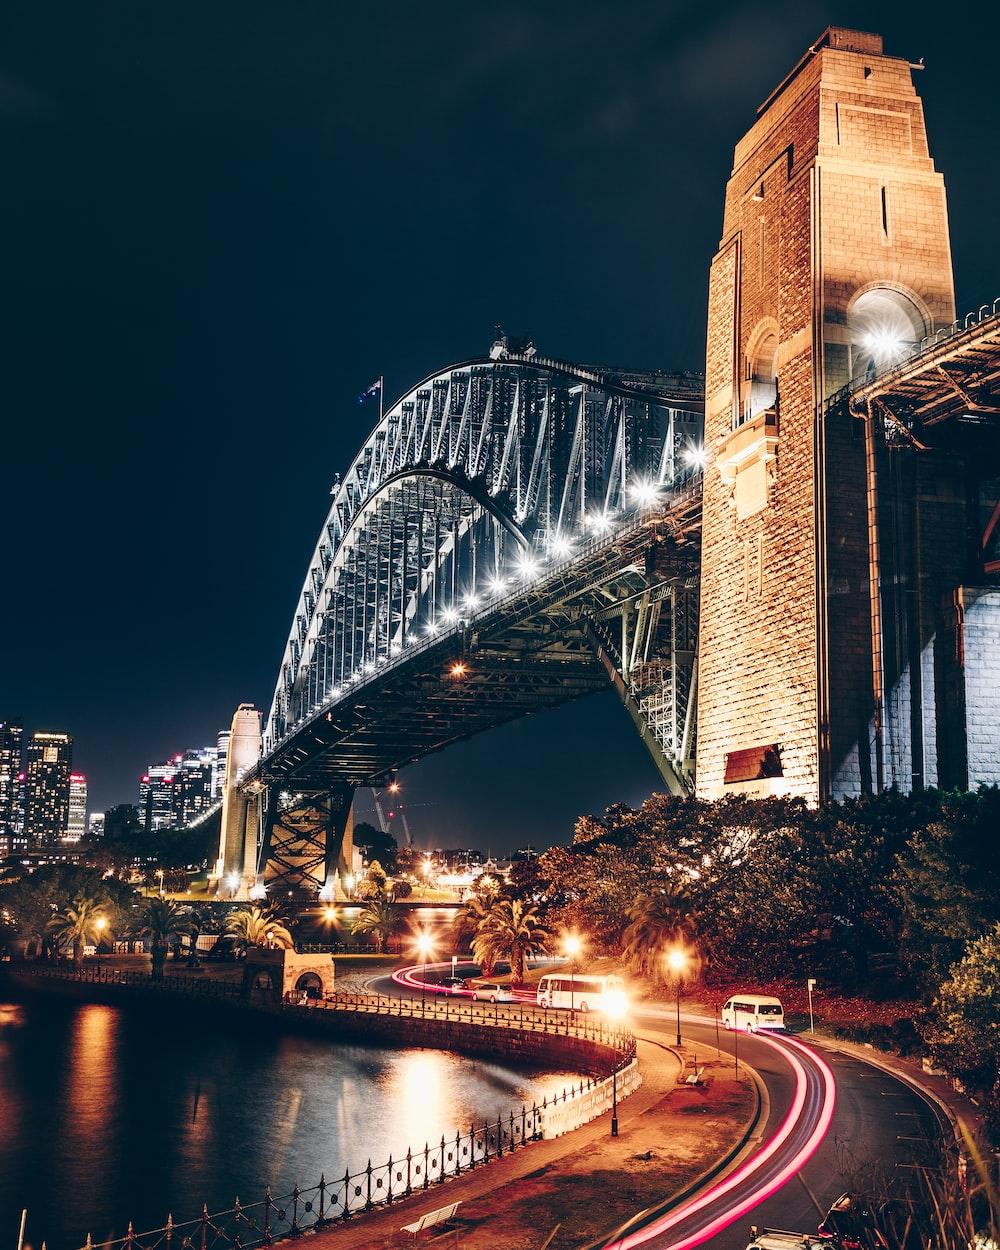 Sydney Australia Iphone Wallpapers Top Free Sydney Australia Iphone